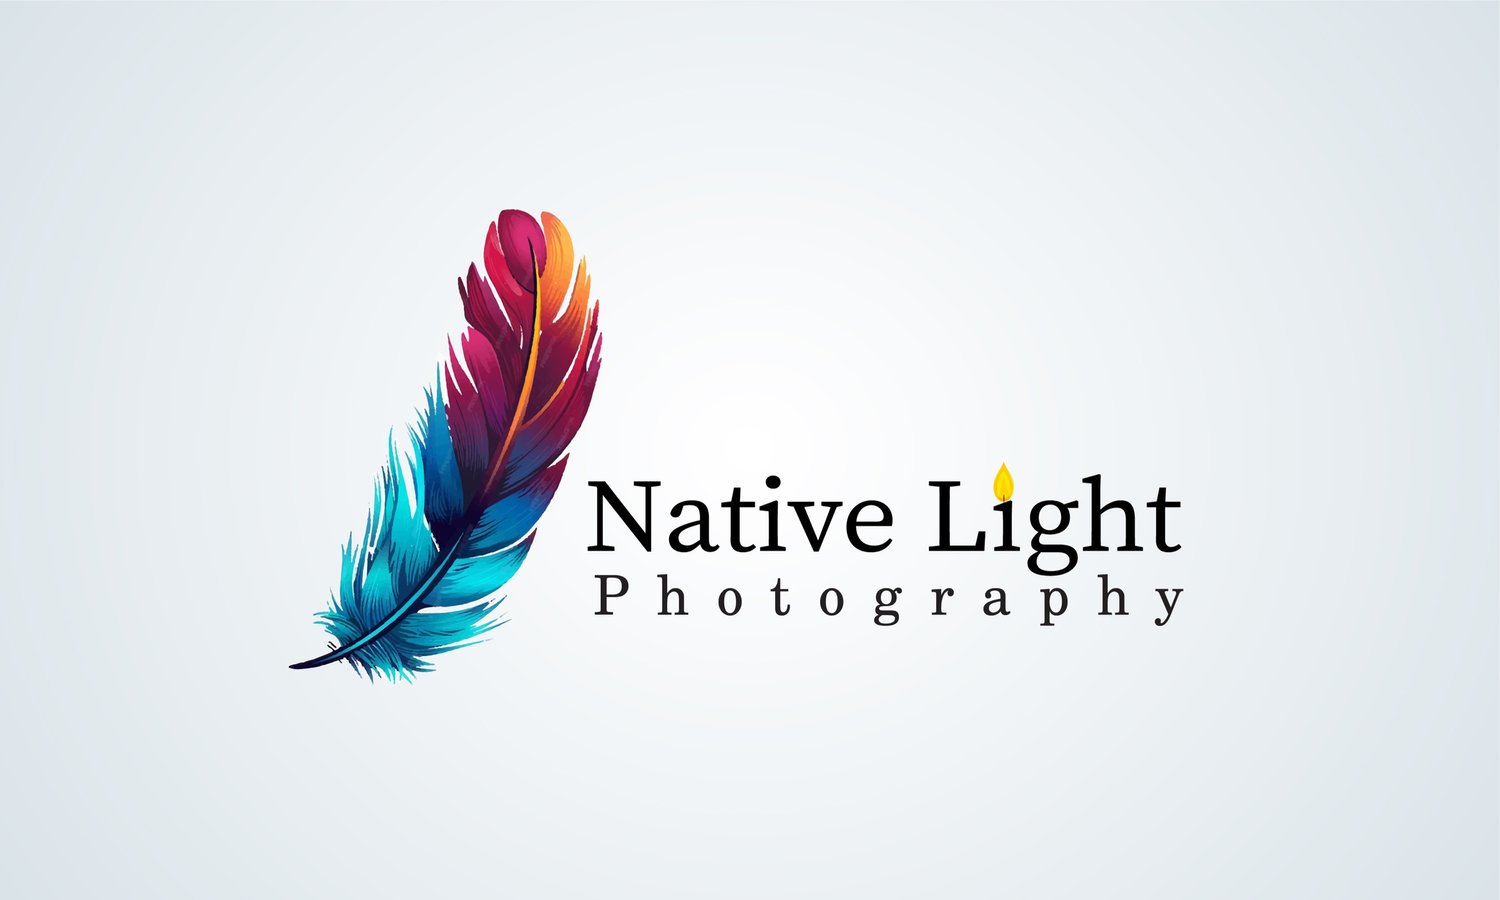 NATIVE LIGHT PHOTOGRAPHY